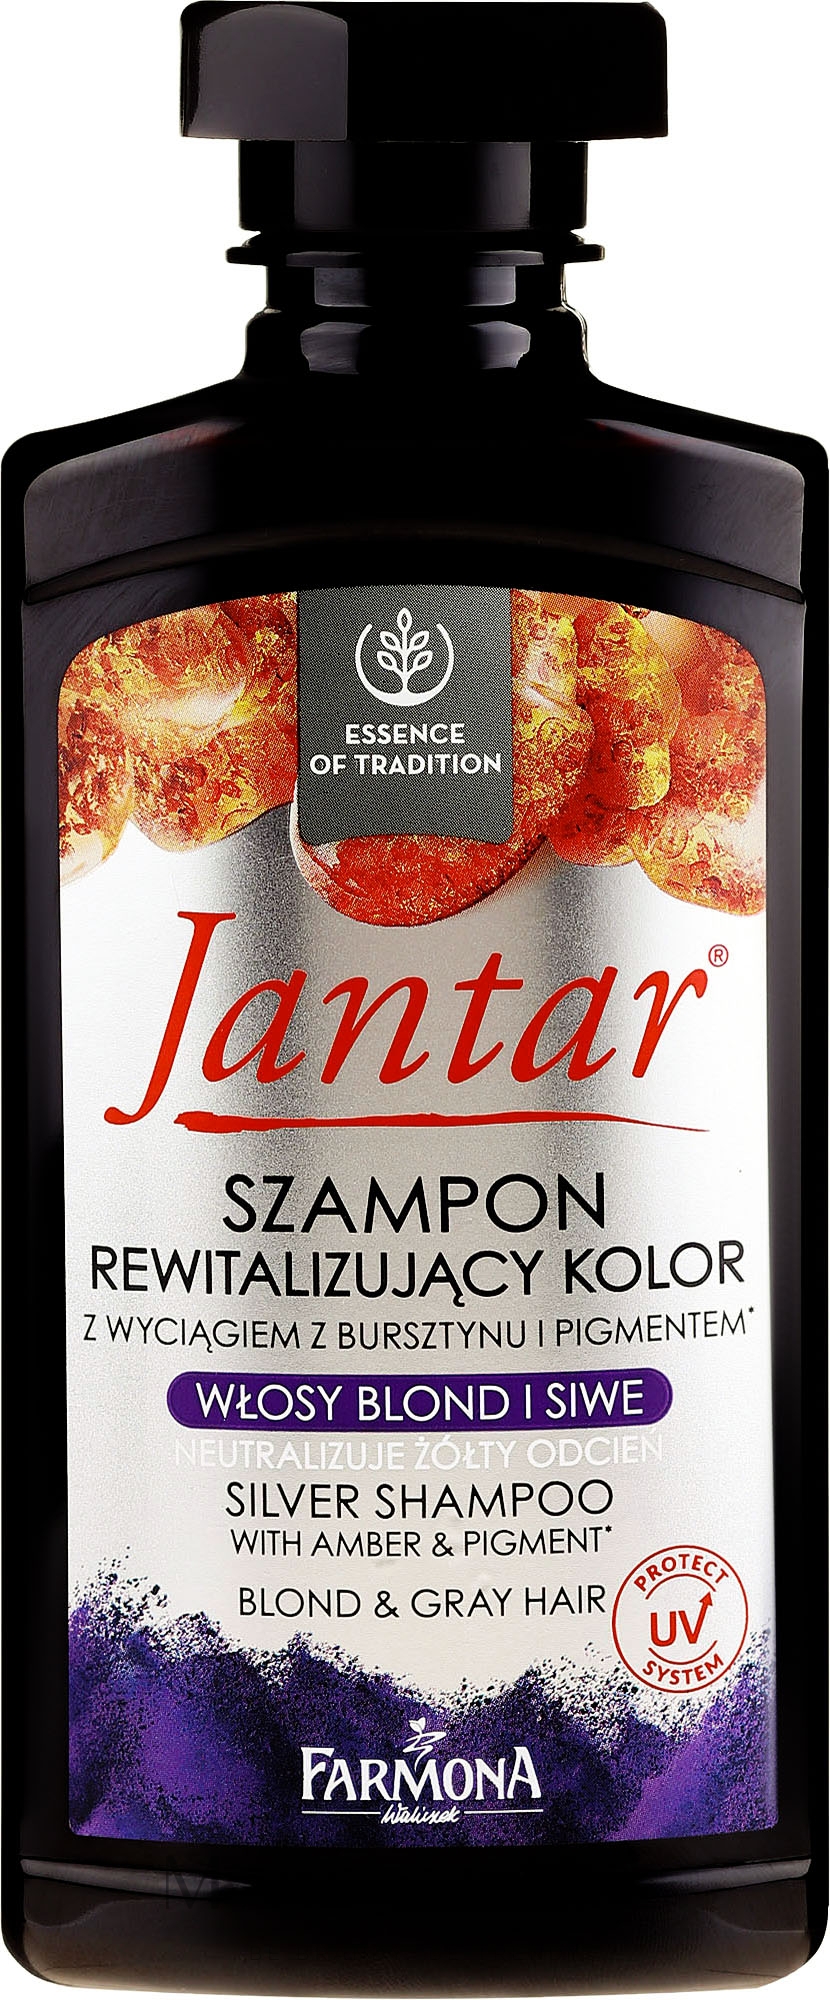 szampon jantar do włosów farbowanuych